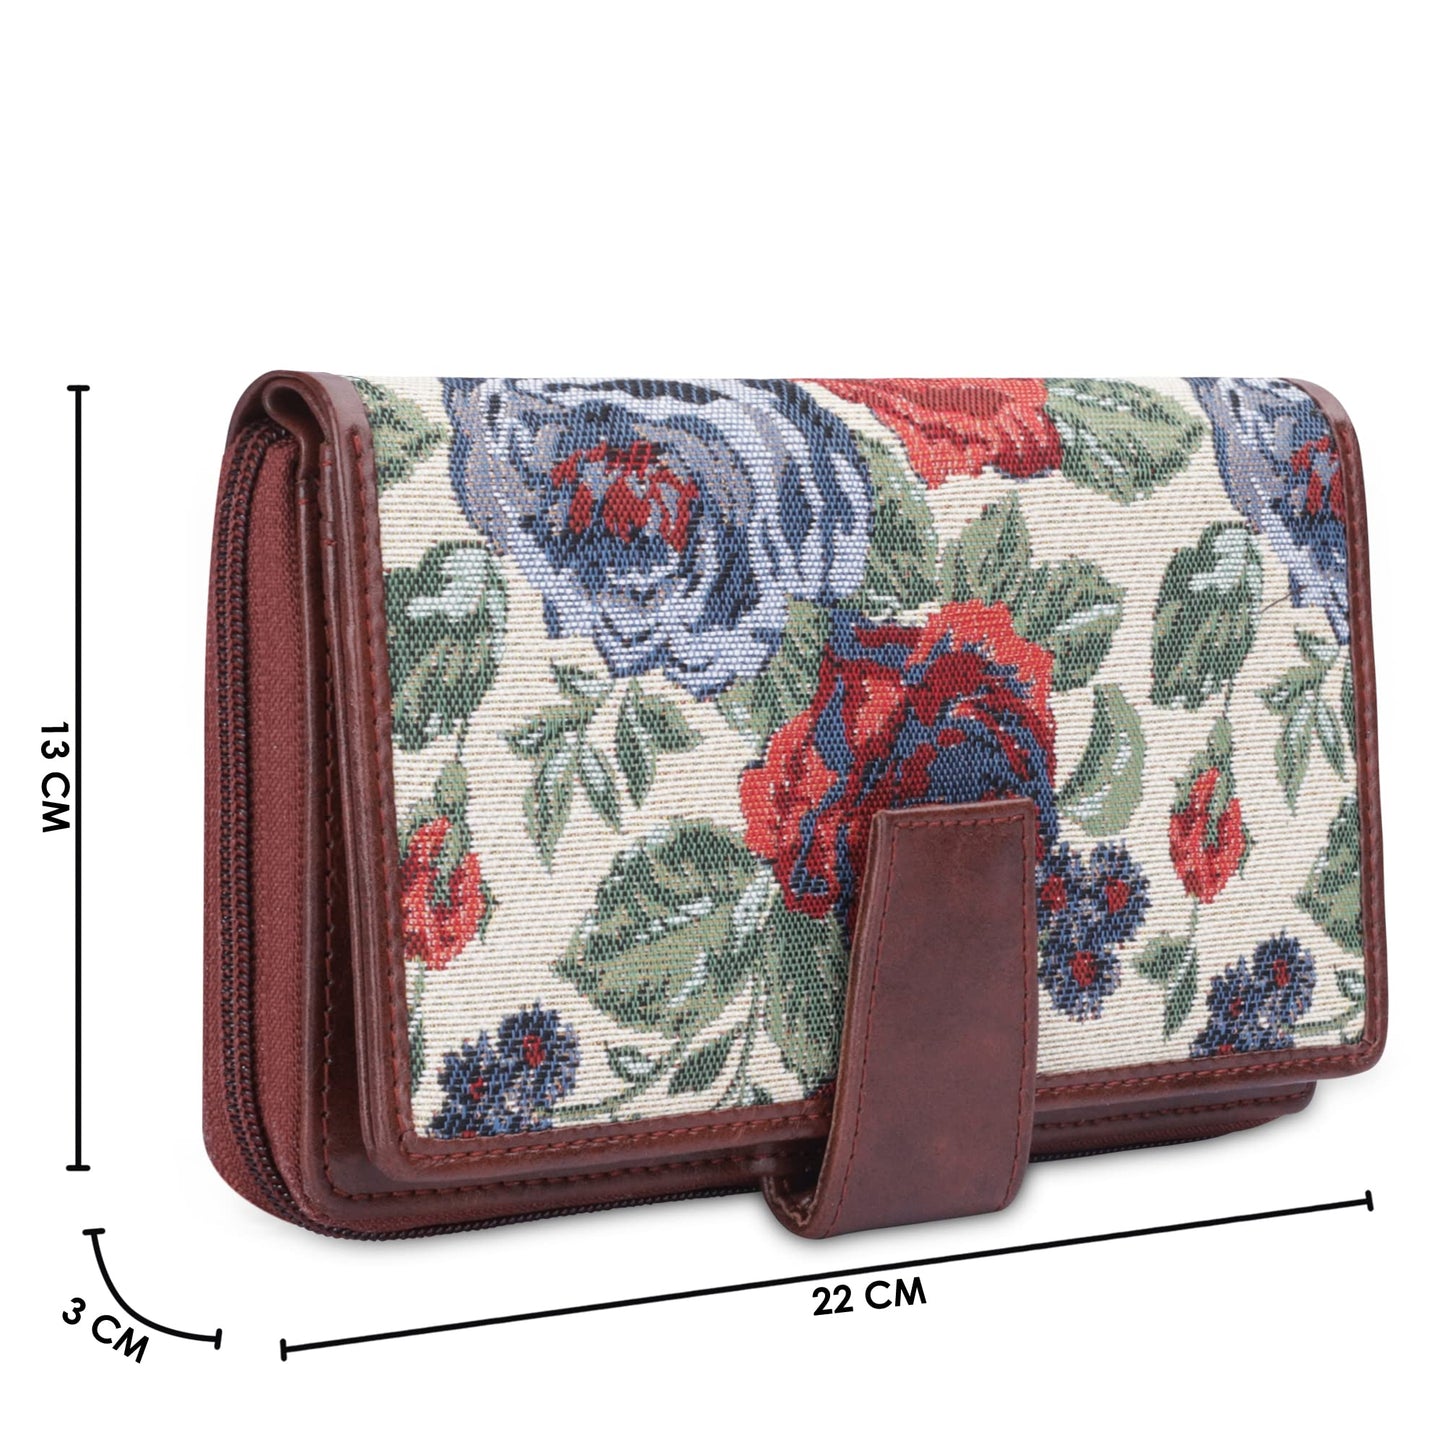 THE CLOWNFISH Filipia Ladies wallet Womens Wrist Clutch Purse (Red-Floral)